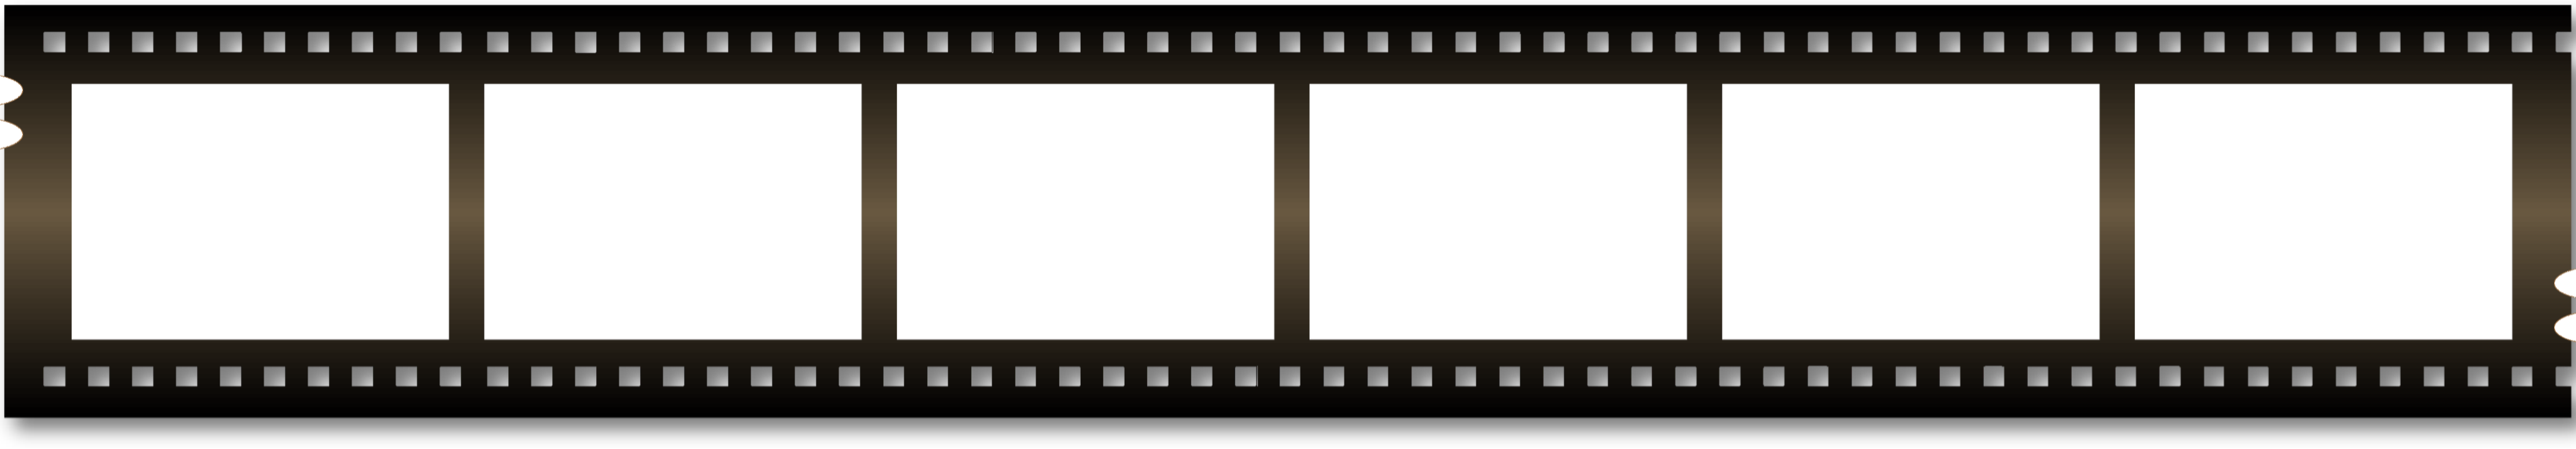 Movie Reel Gallery For Blank Film Strip Clipart